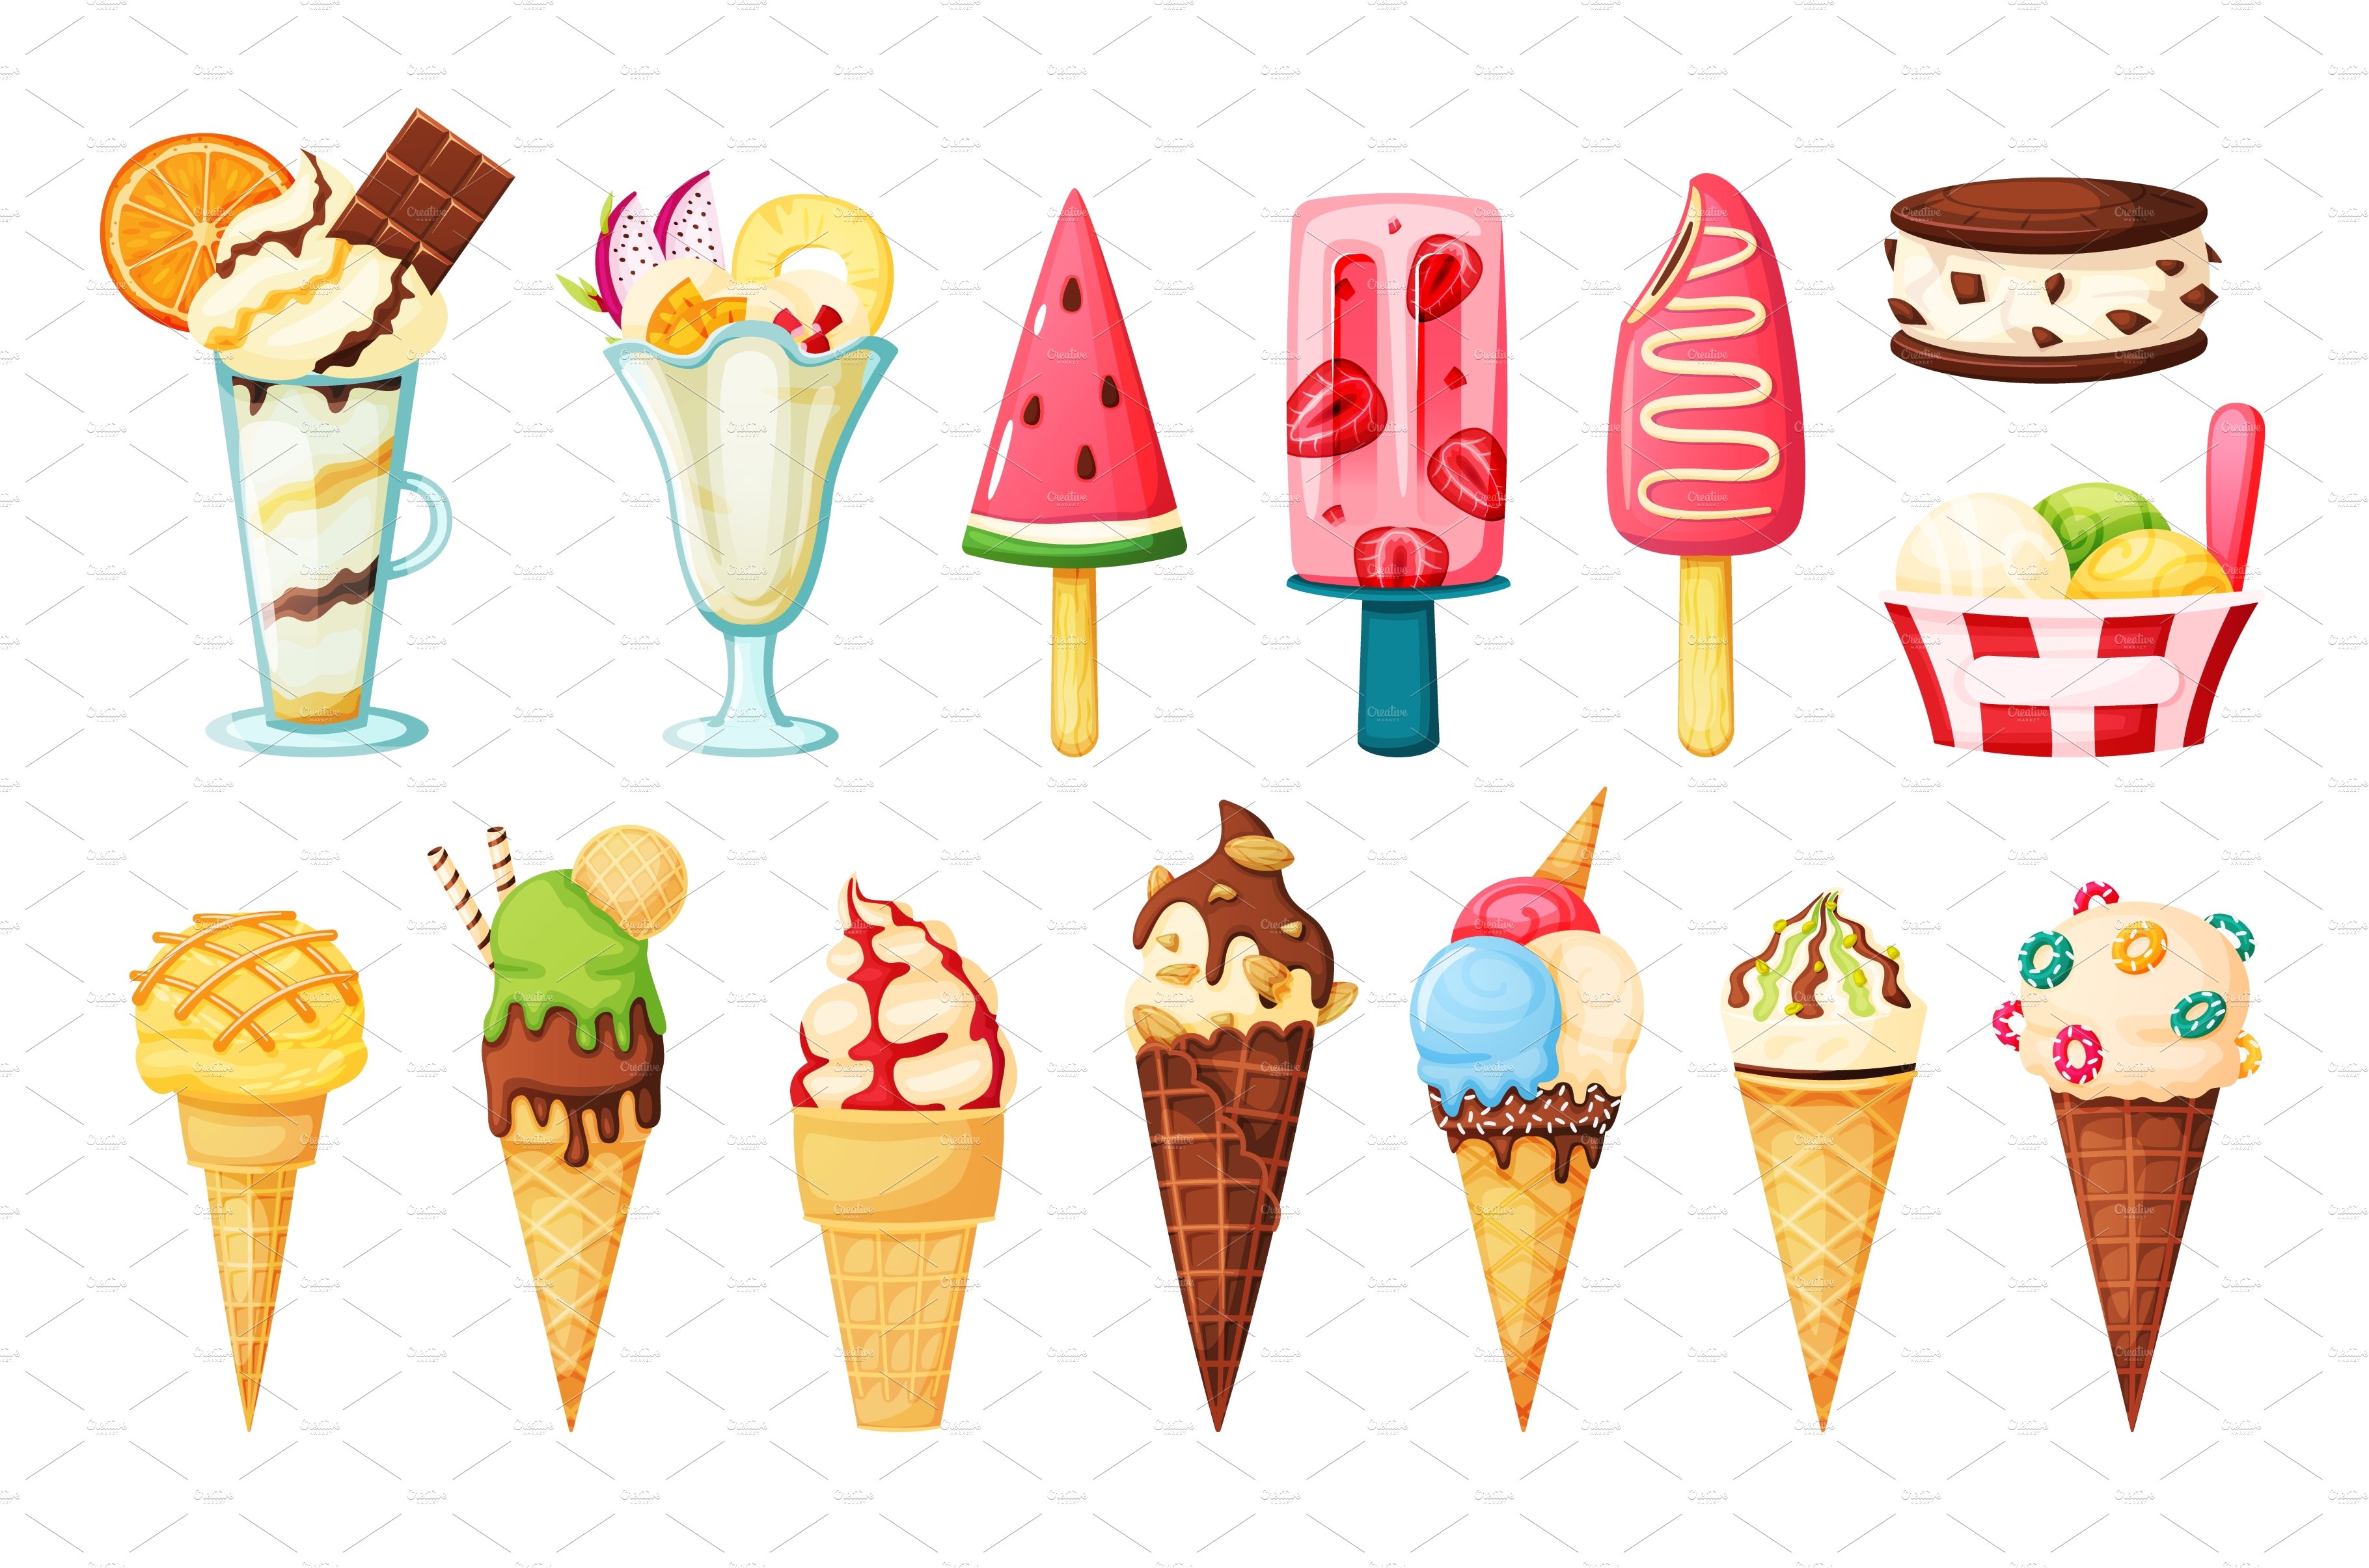 Ice cream cones. Strawberry popsicle cover image.